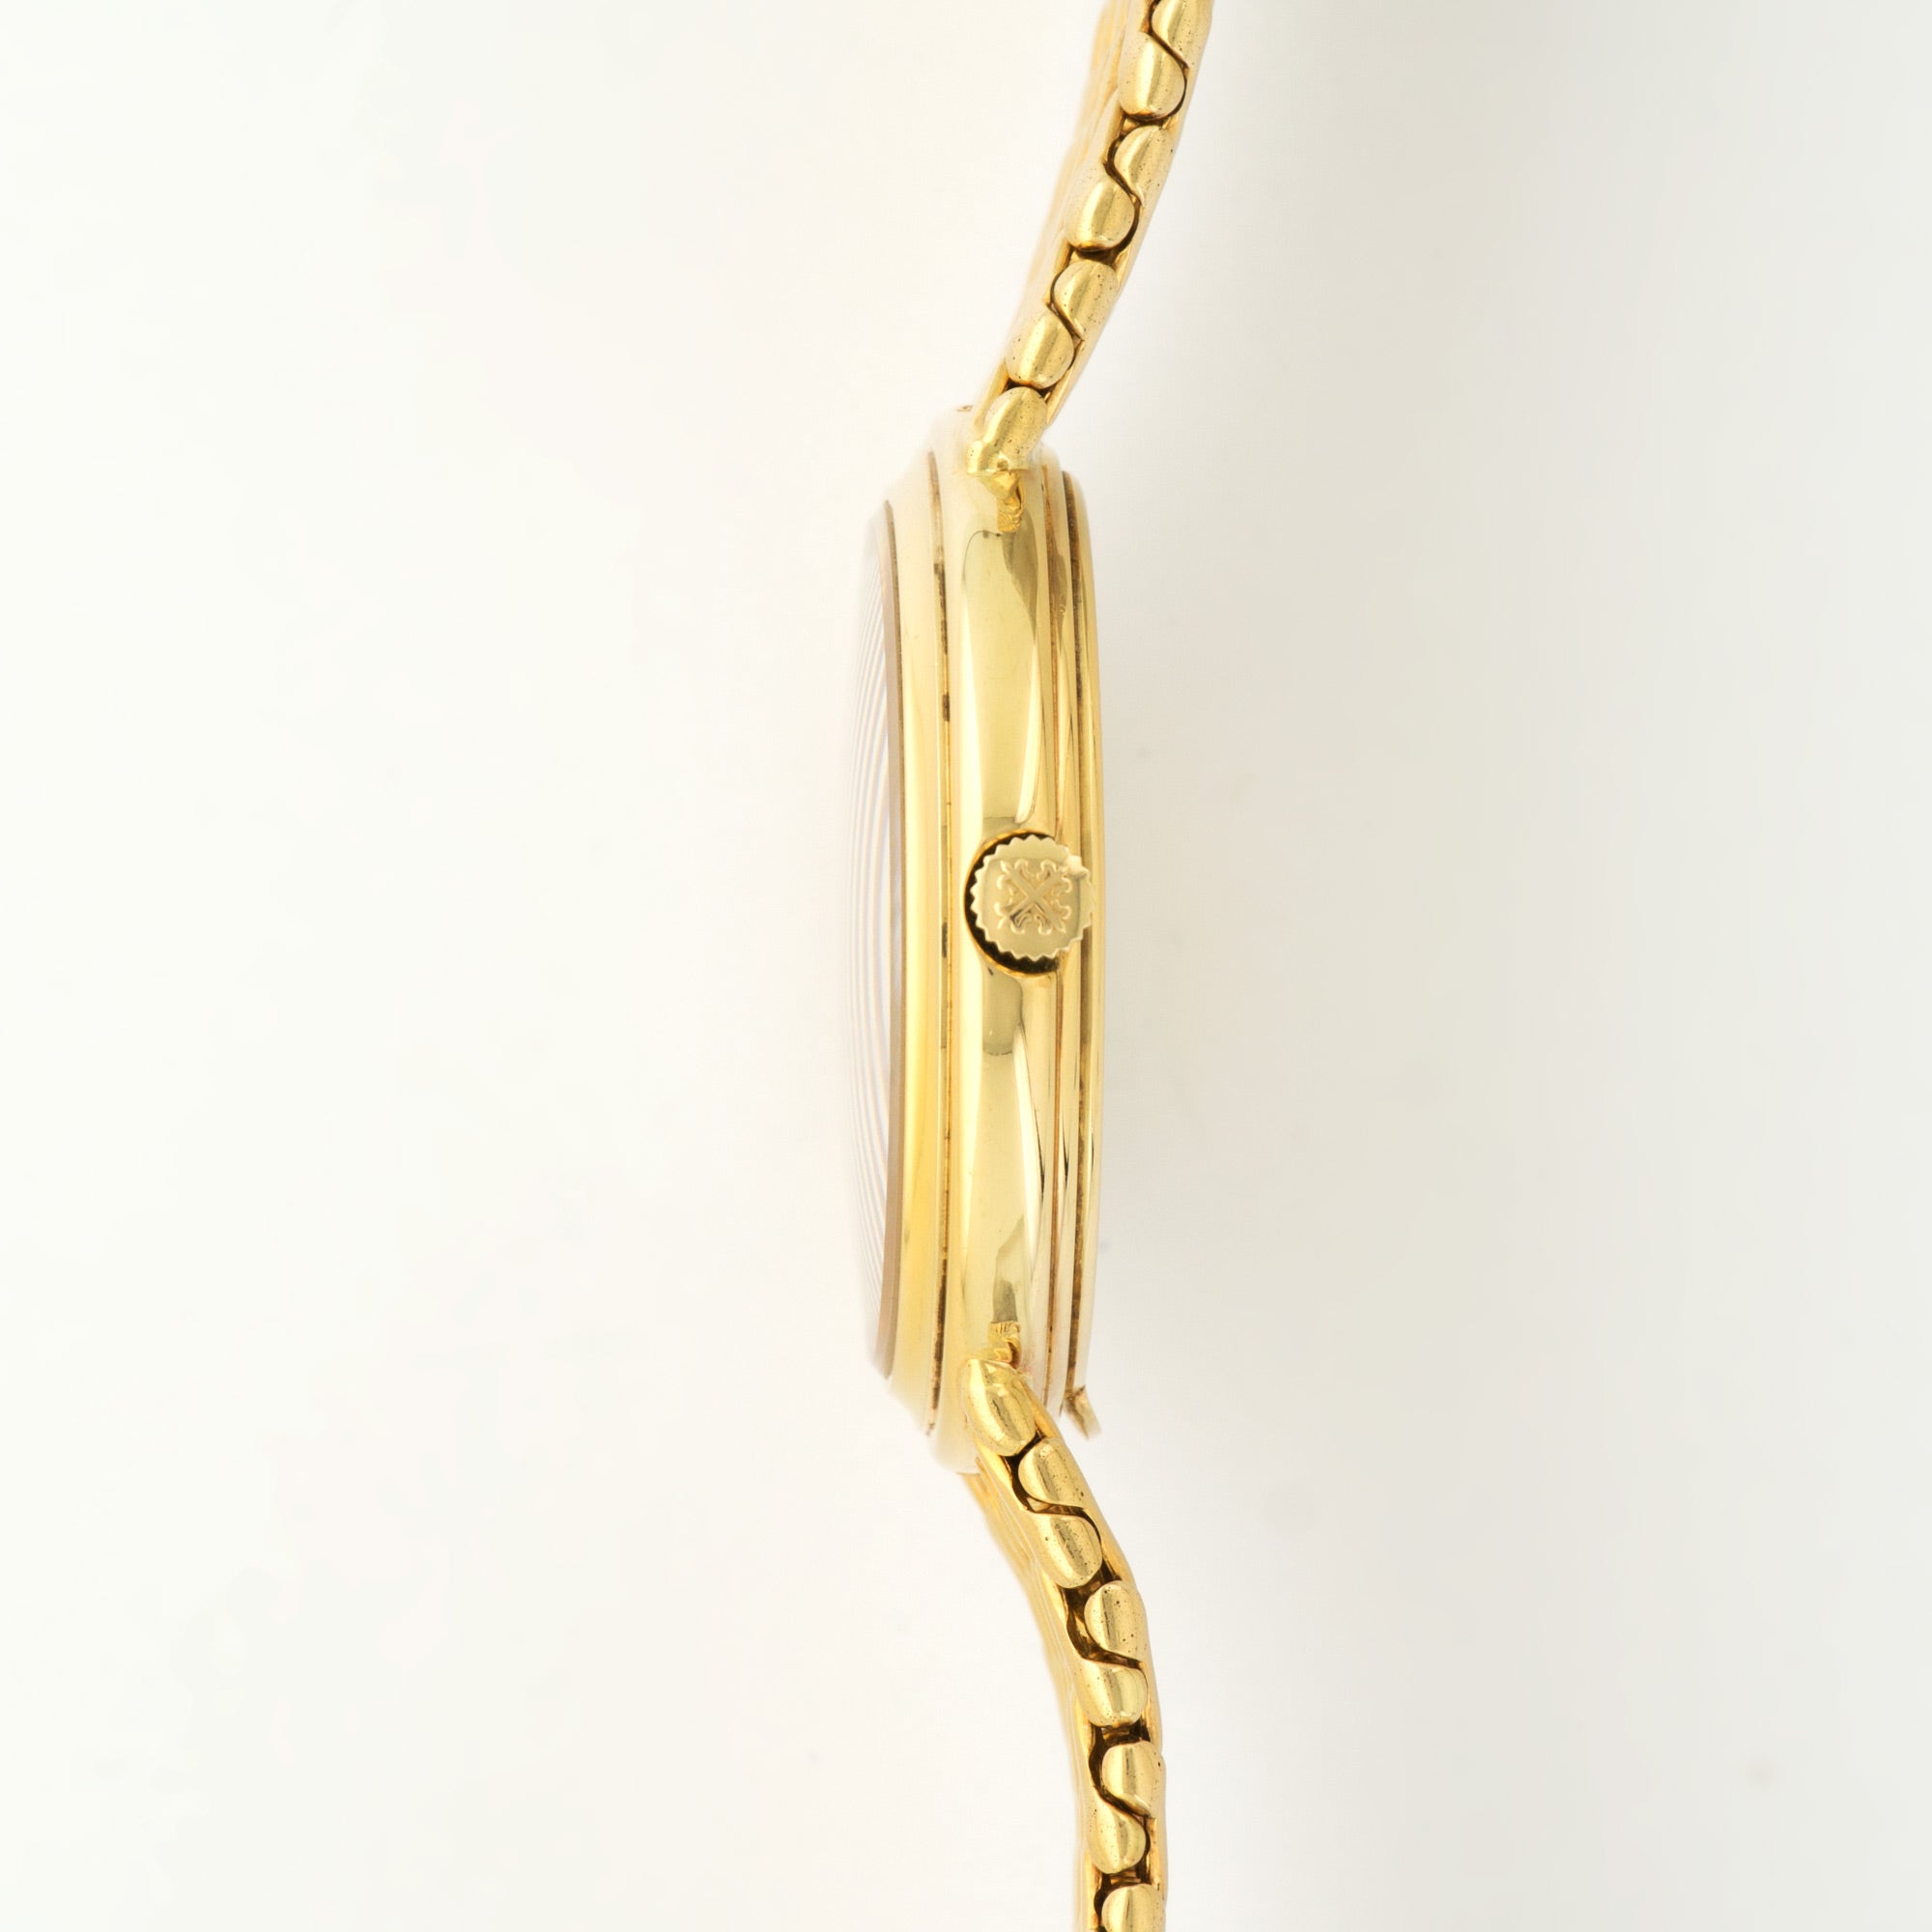 Patek Philippe Yellow Gold Perpetual Calendar Automatic Watch Ref. 3945